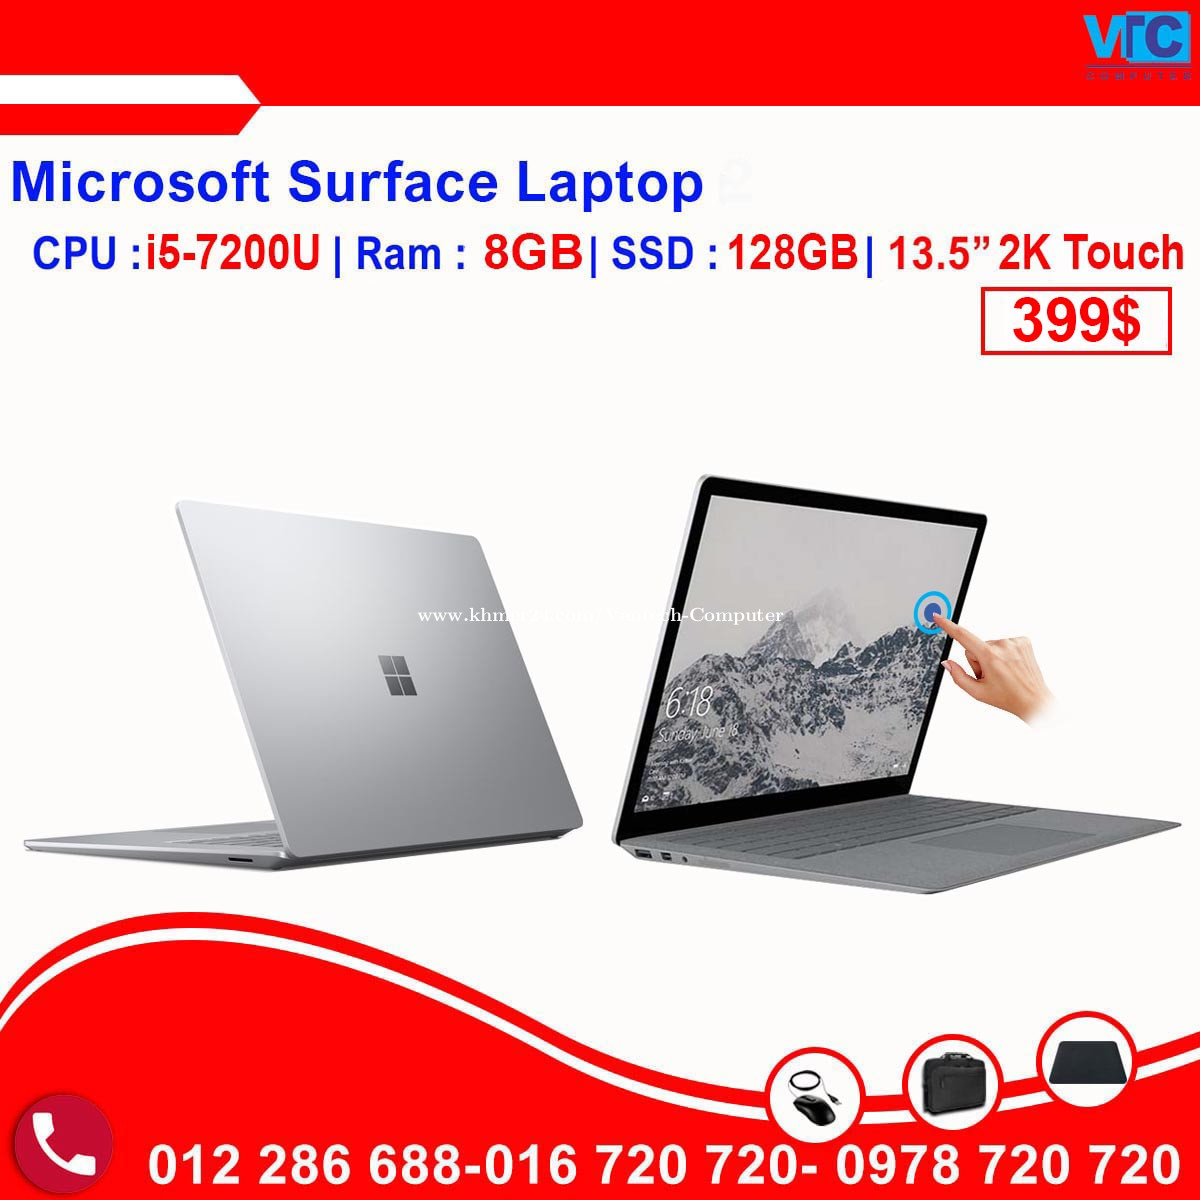 Surface Laptop 2 Price $649.00 in Mittakpheap, Cambodia - Vantech